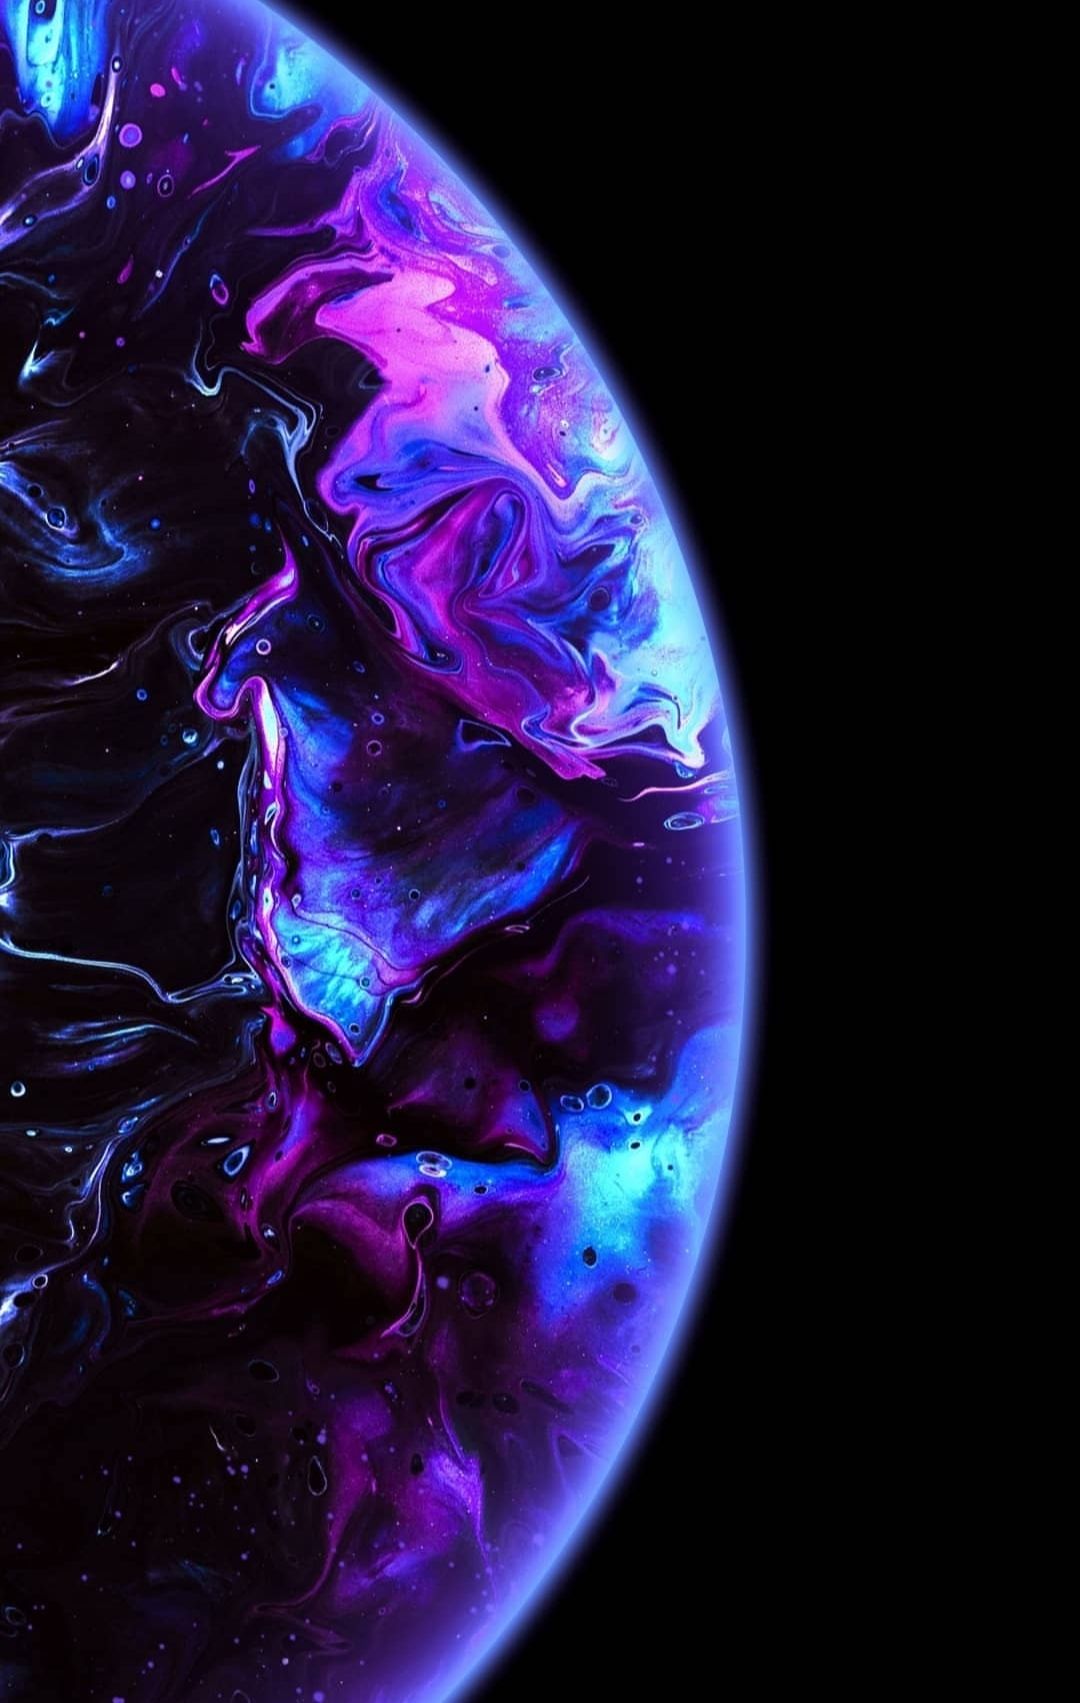 Earth on NEON Wallpaper. Neon wallpaper, Wallpaper iphone neon, Galaxy phone wallpaper